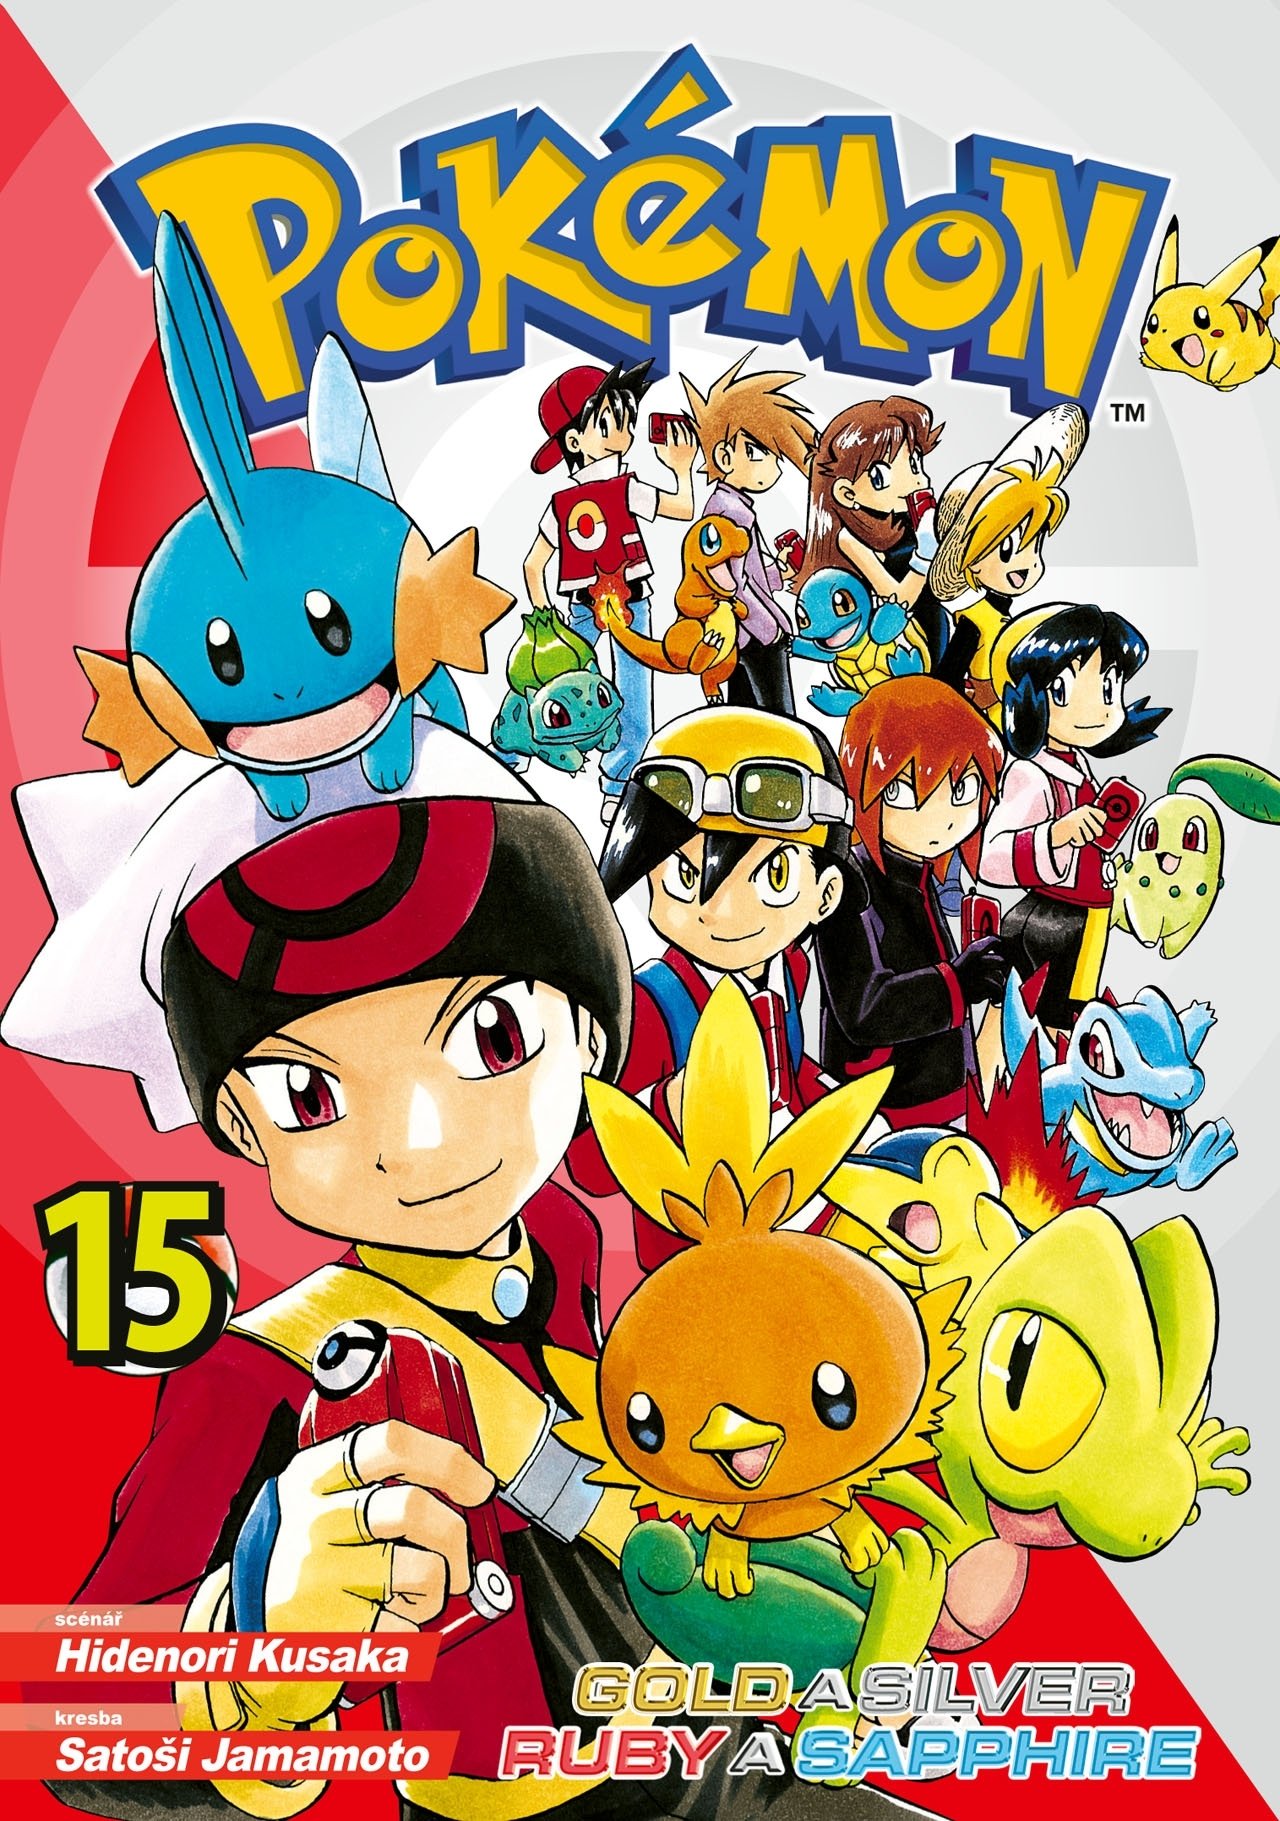 Pokémon 15 - Gold a Silver / Ruby a Sapphire - Jamamoto, Satoši; Kusaka, Hidenori